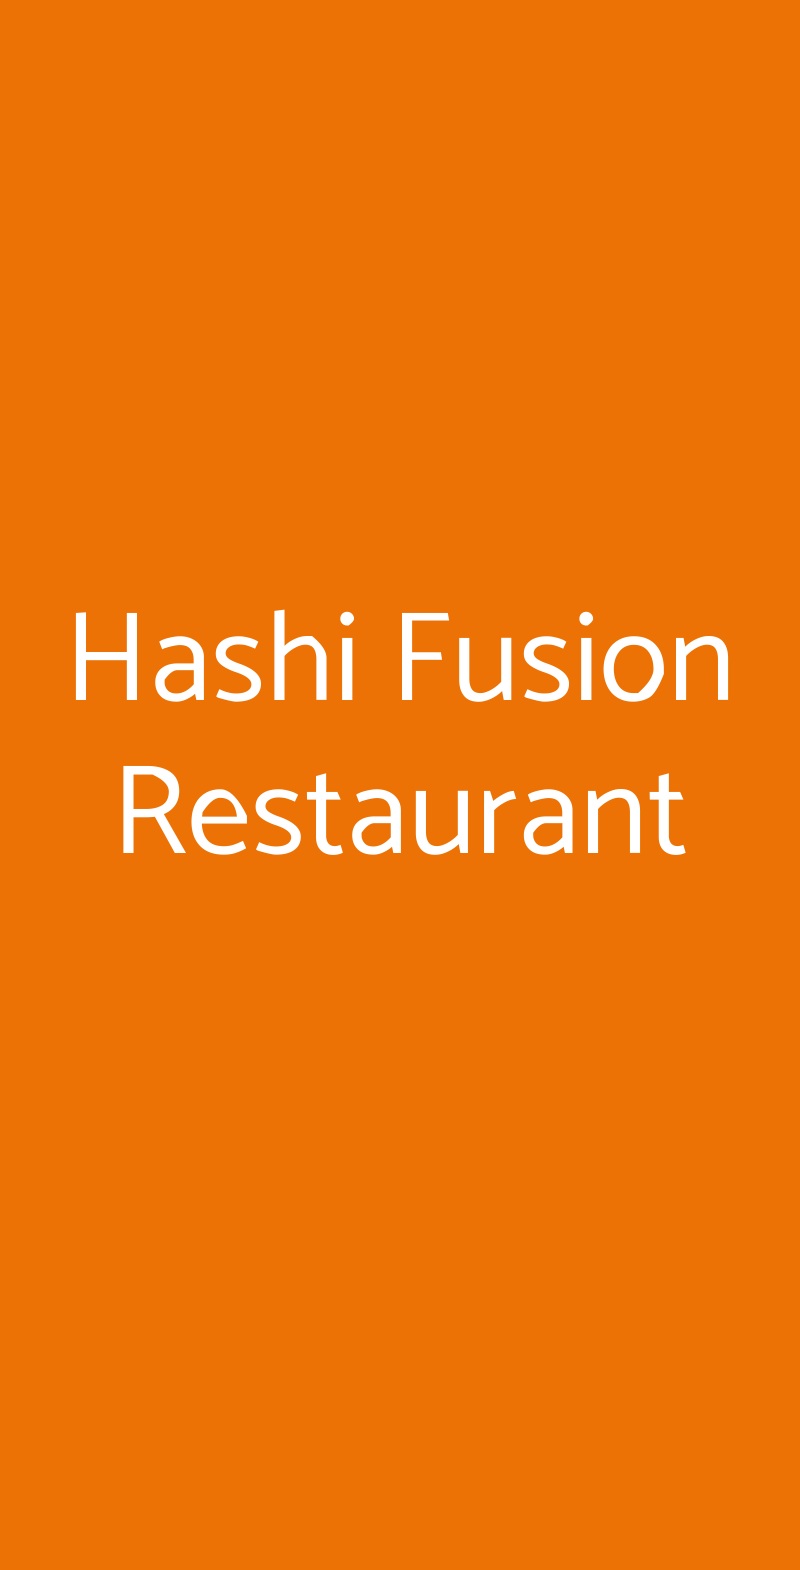 Hashi Fusion Restaurant Milano menù 1 pagina